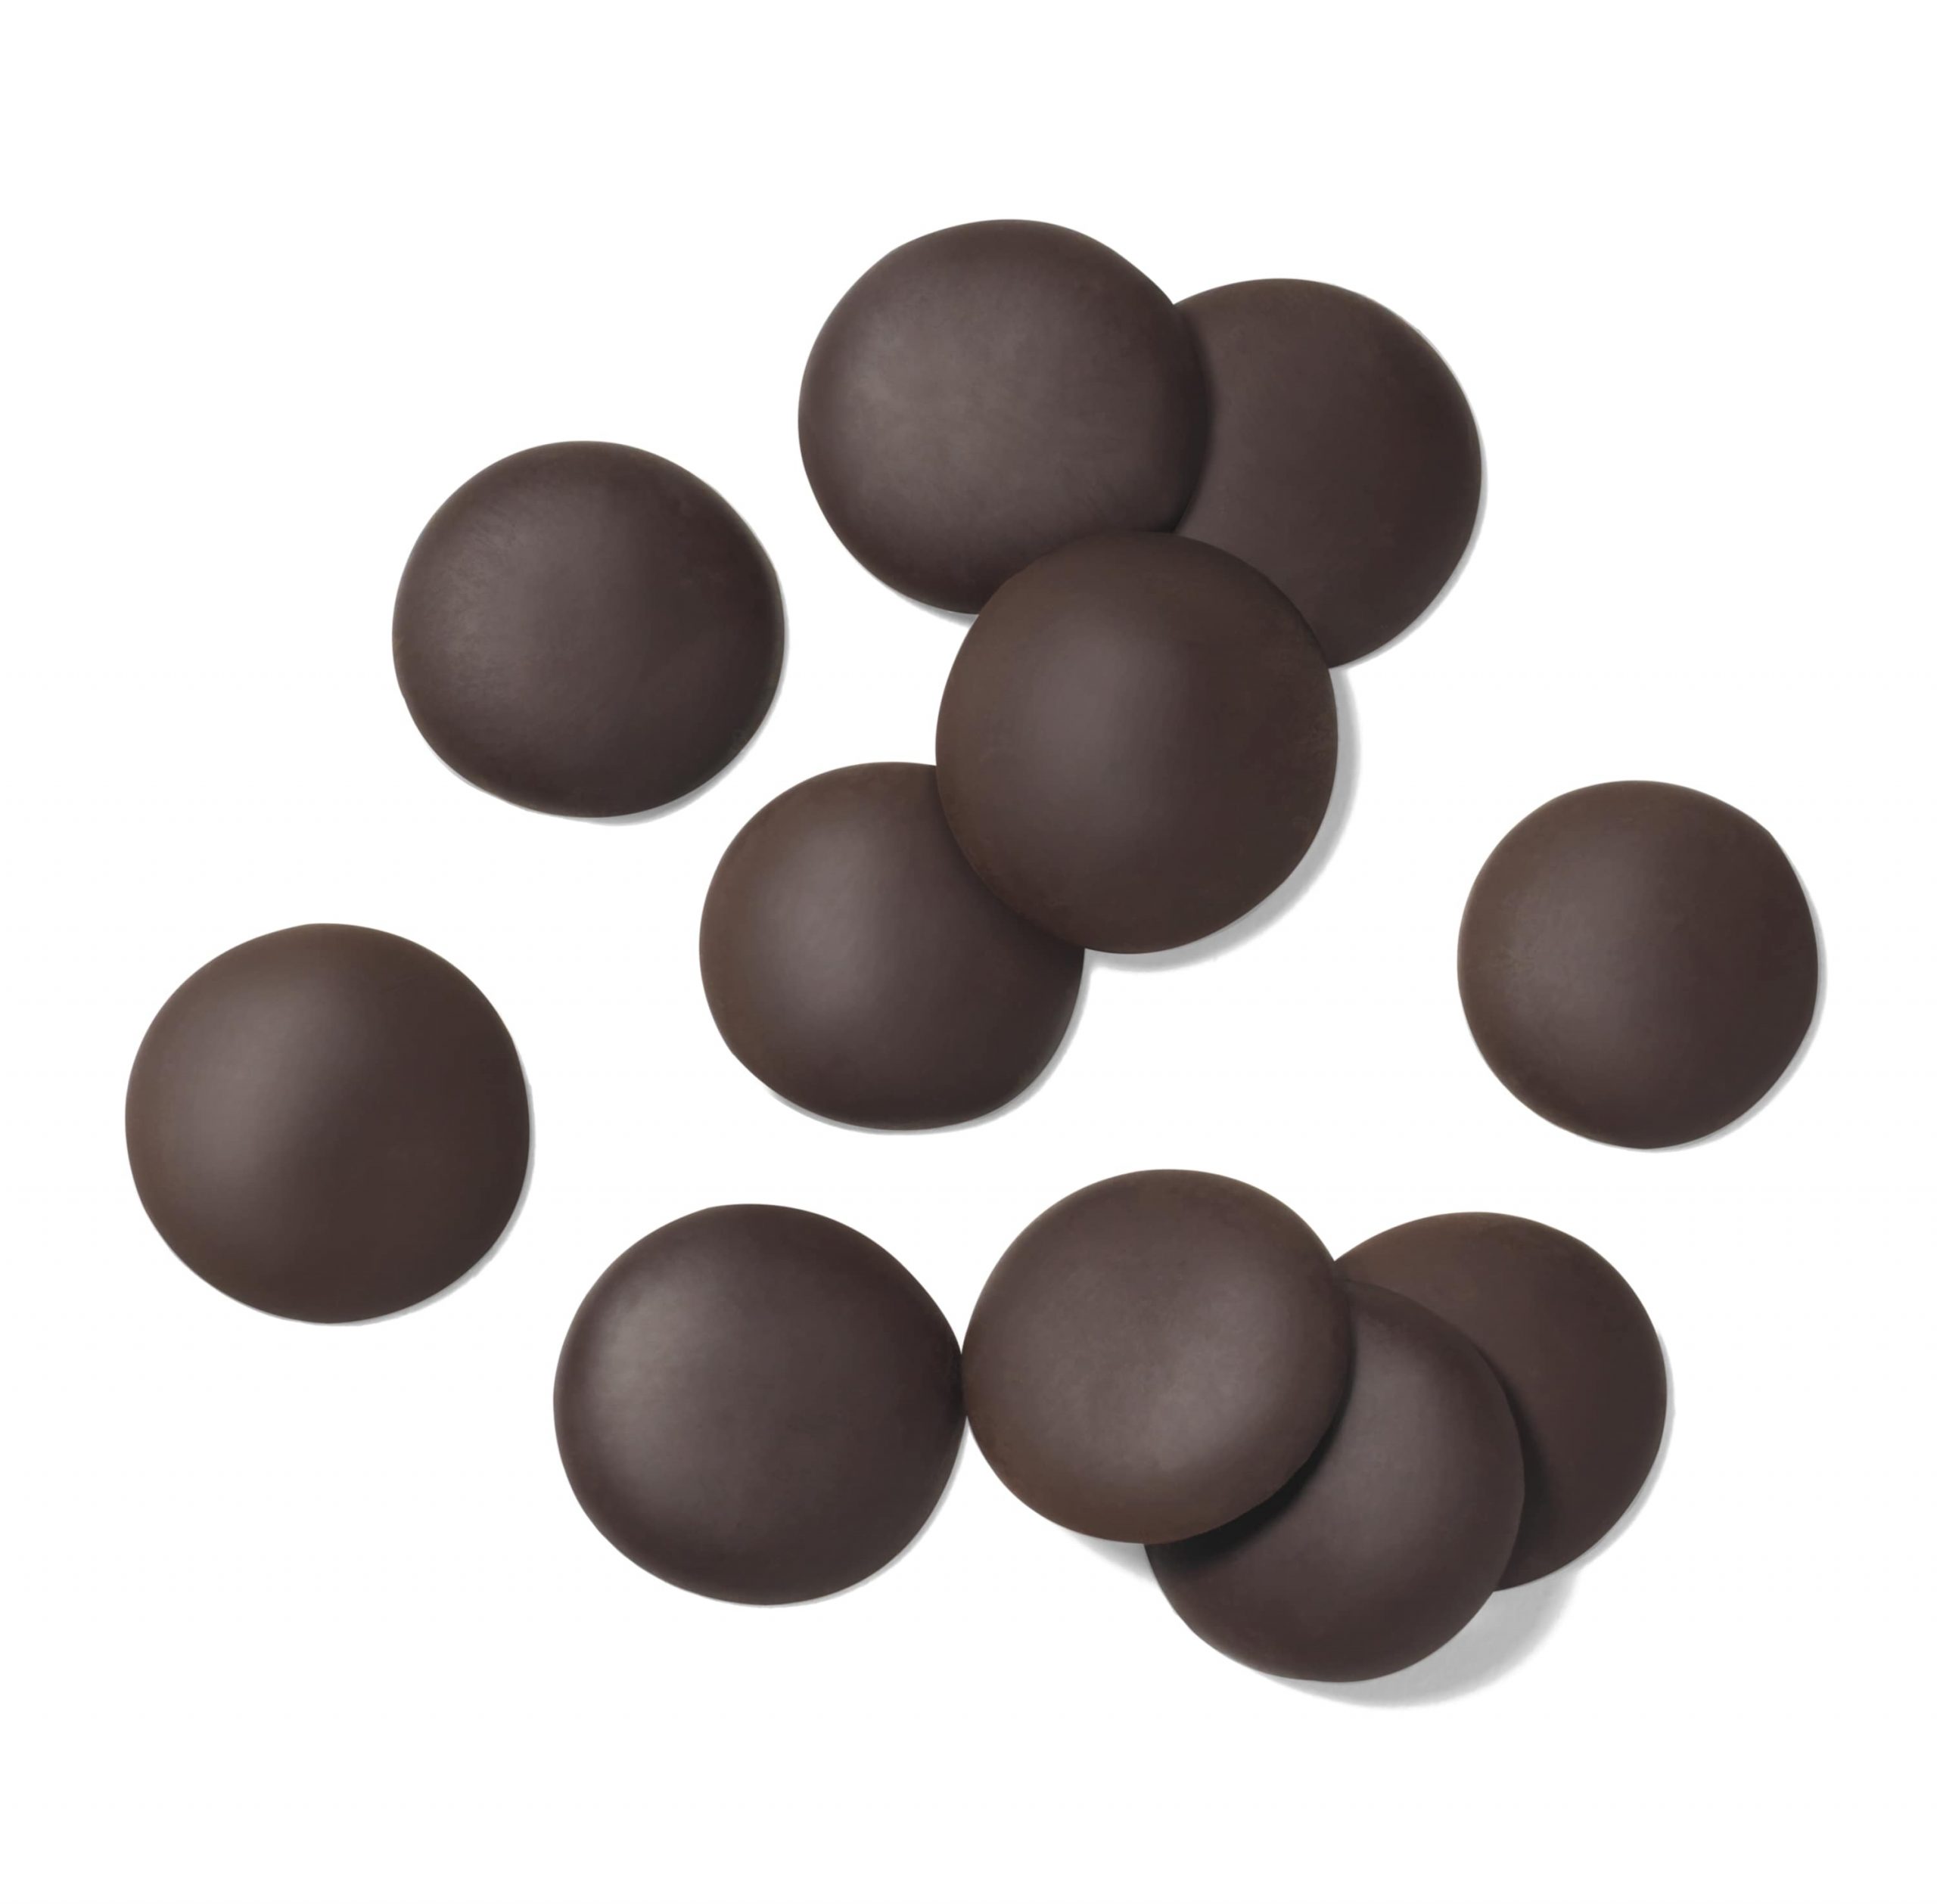 Guittard Oban 100% Unsweetened Chocolate Wafers